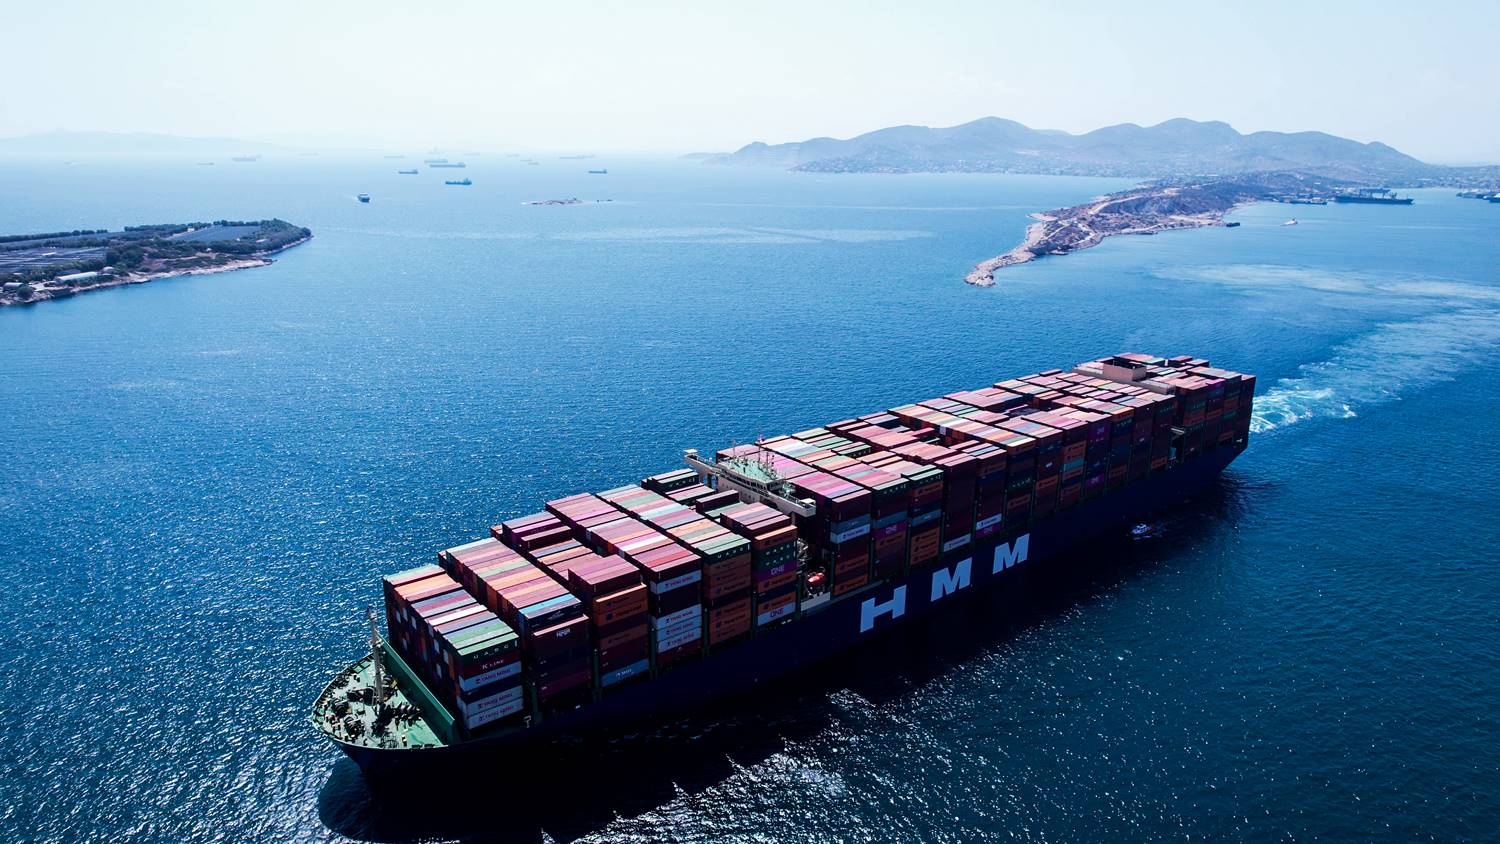 Dam  The Global Maritime Business News Portal - The Maritime Economy  Publications